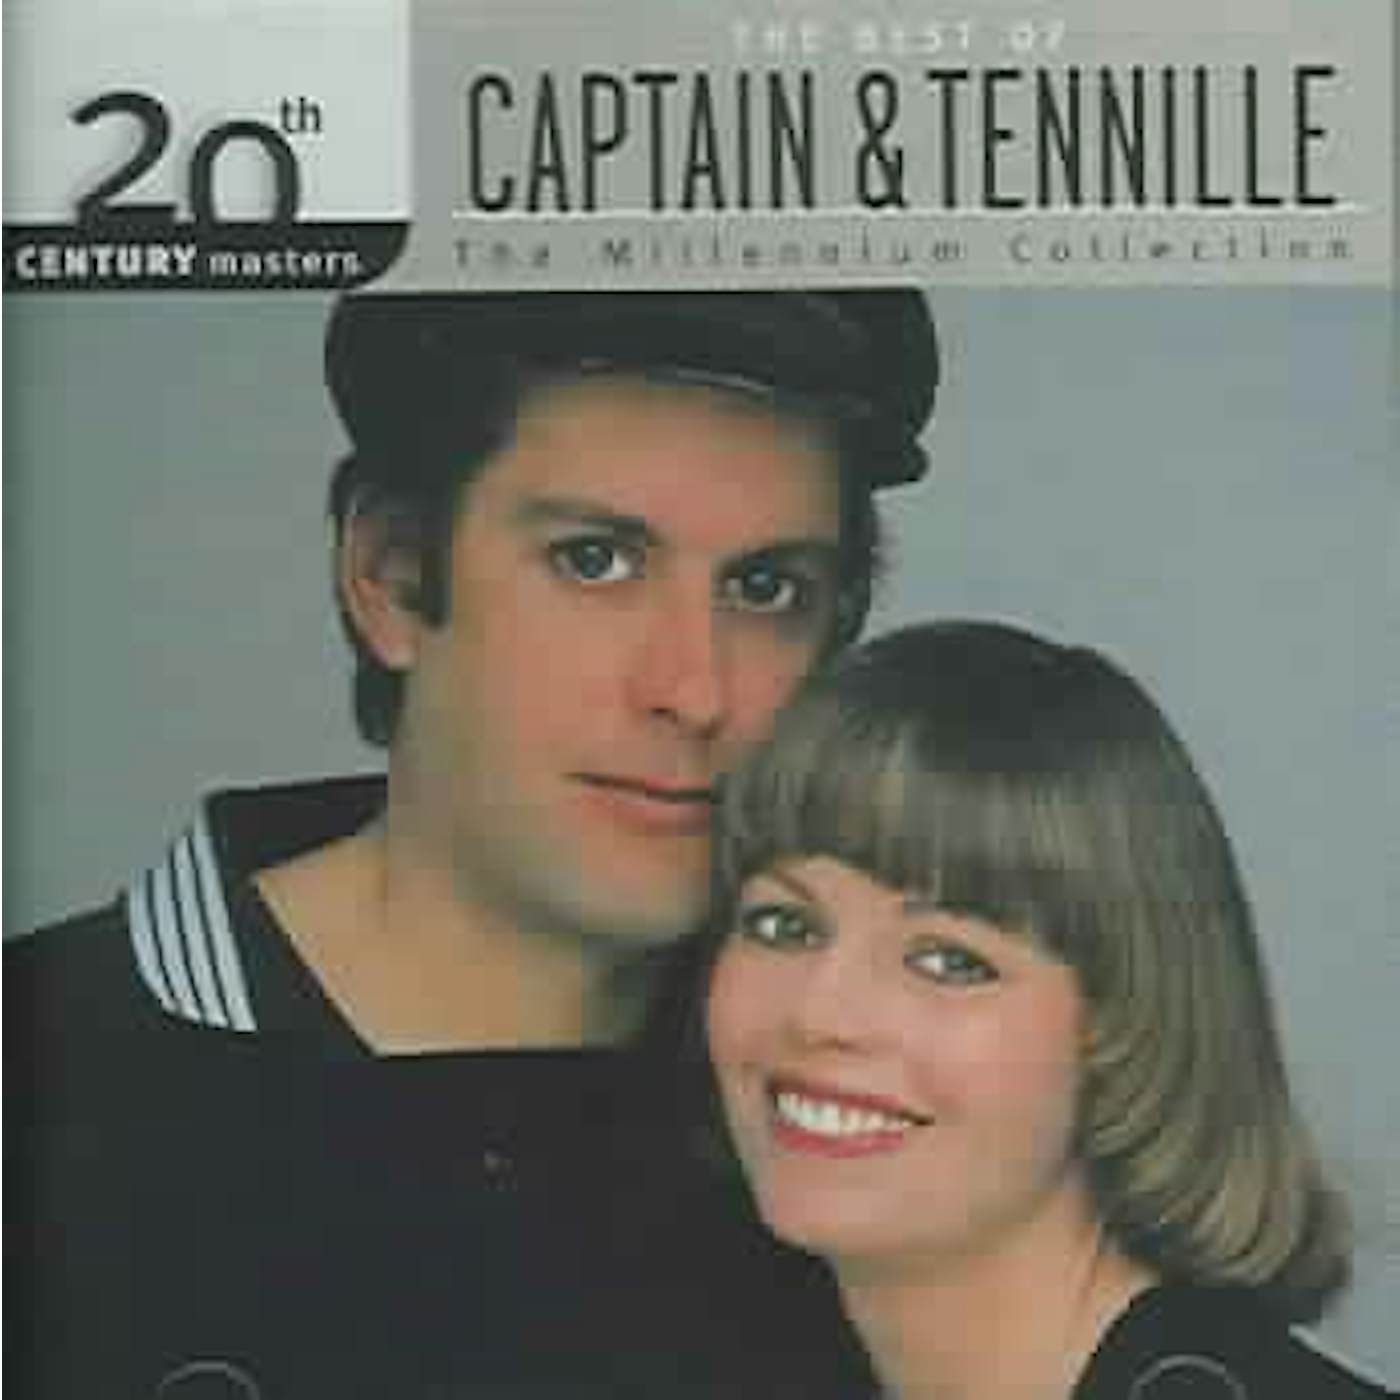 Captain & Tennille Millennium Collection - 20th Century Masters CD